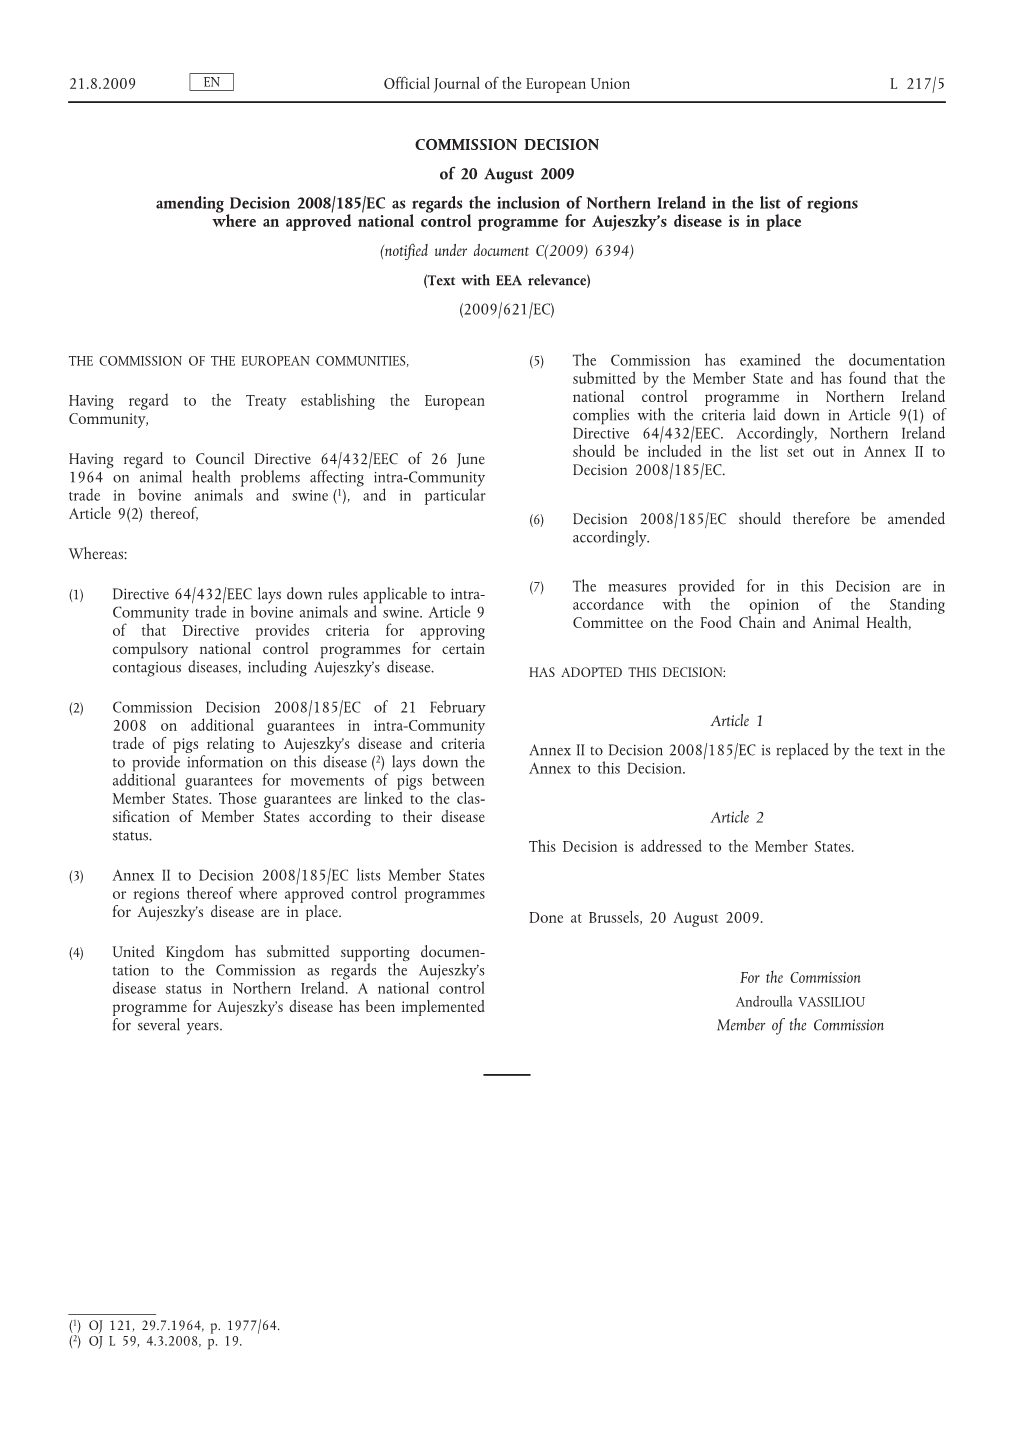 Commission Decision of 20 August 2009 Amending Decision 2008/185